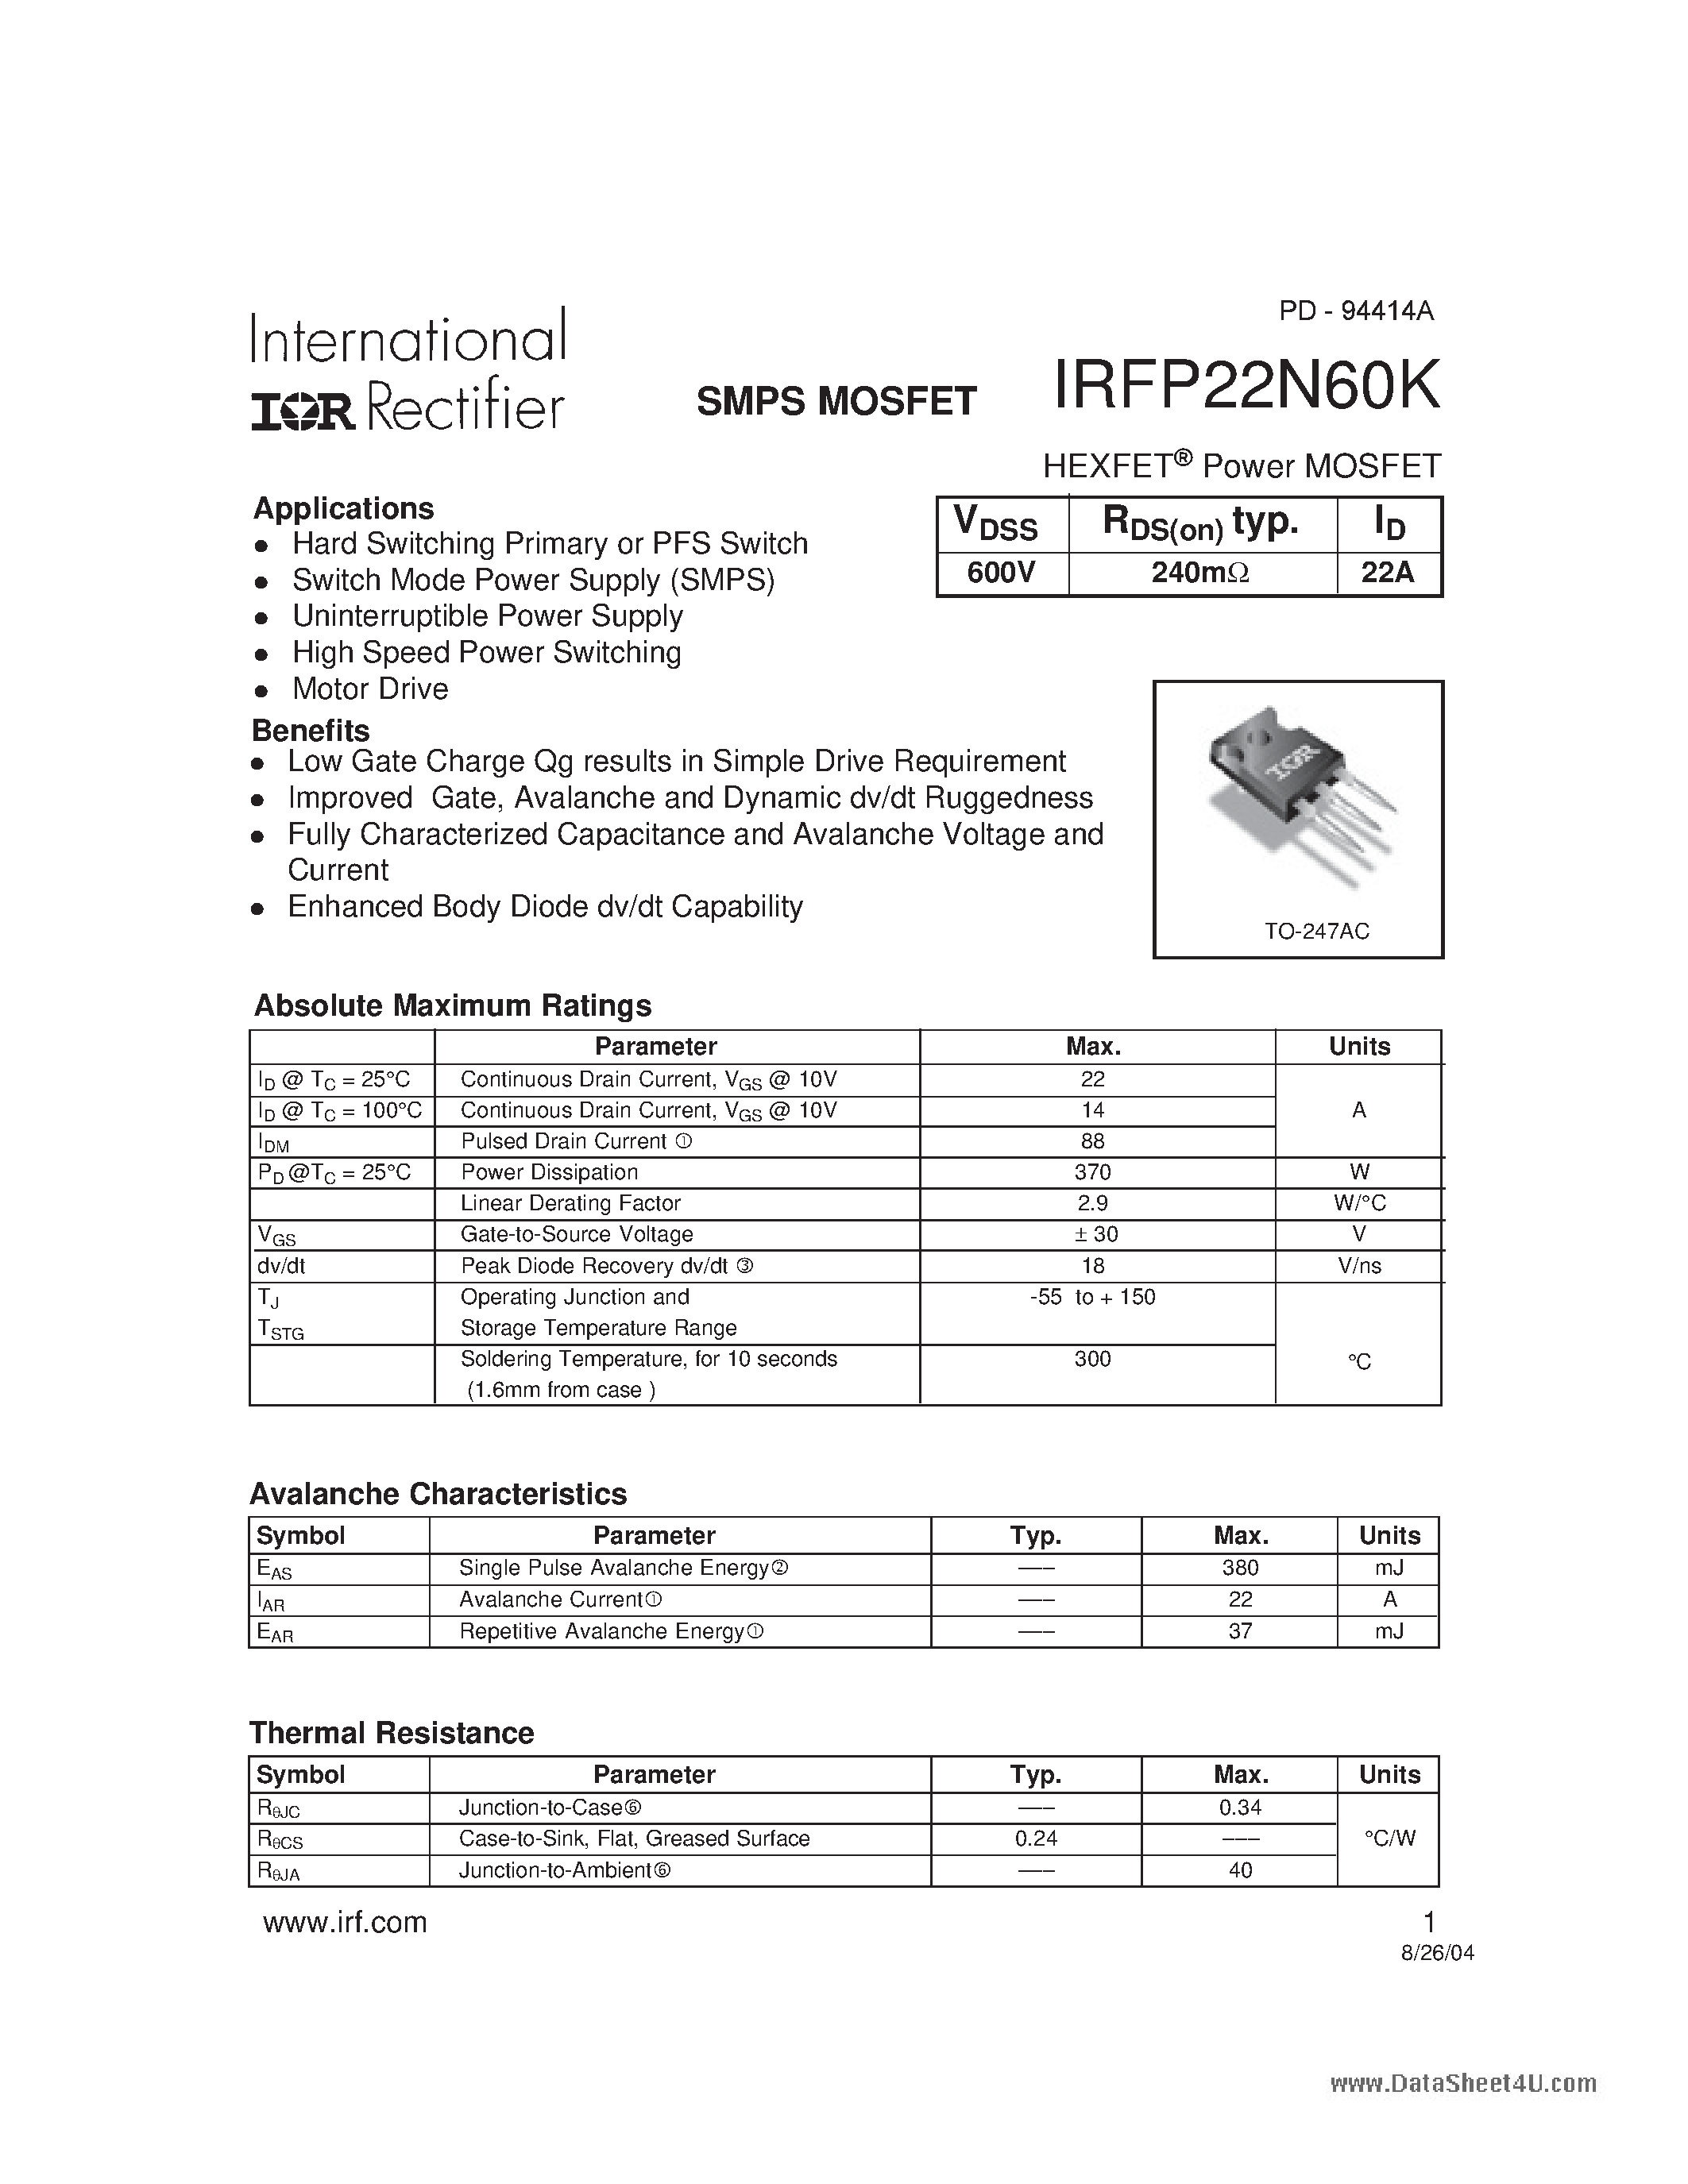 Даташит IRFP22N60K - SMPS MOSFET страница 1